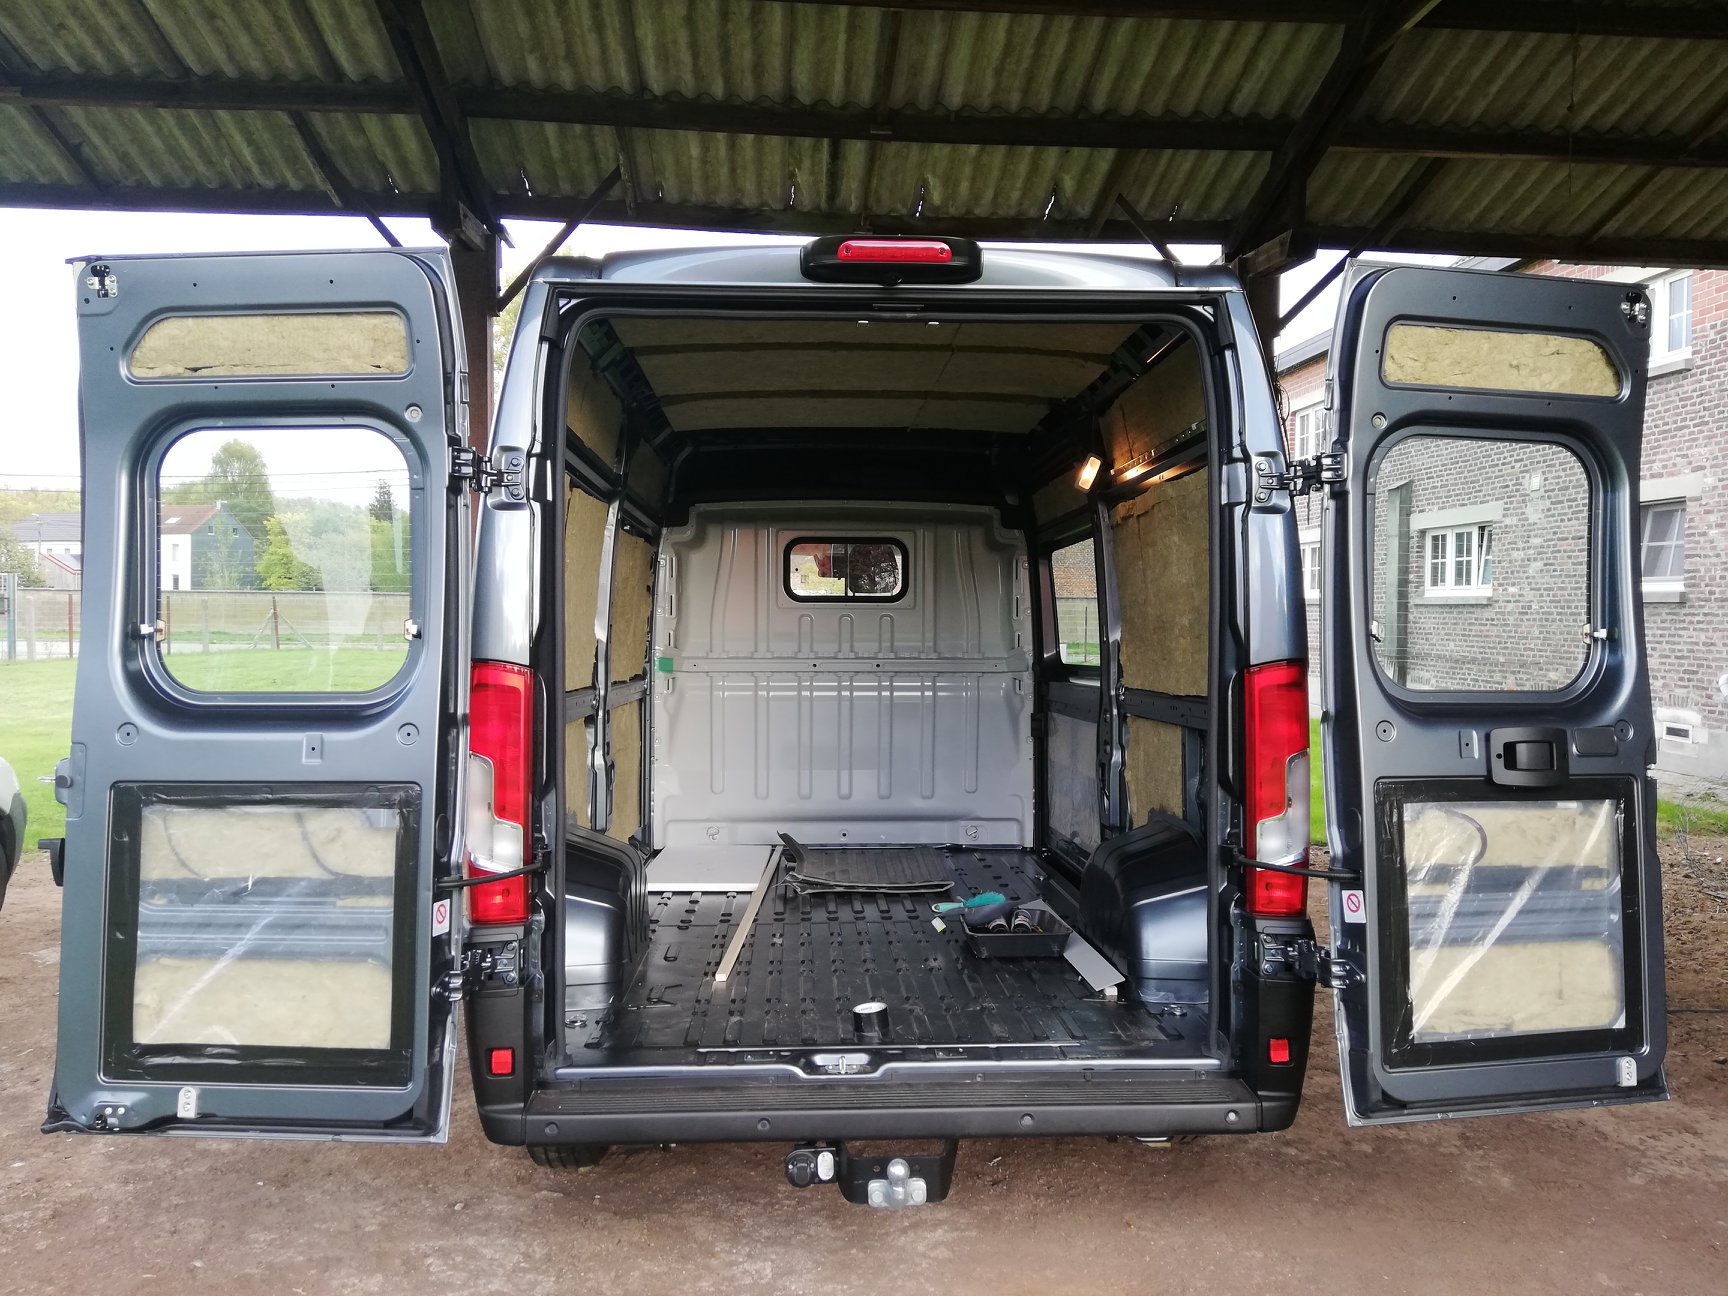 Aménagement Fiat Ducato en camping-car - WEST Van